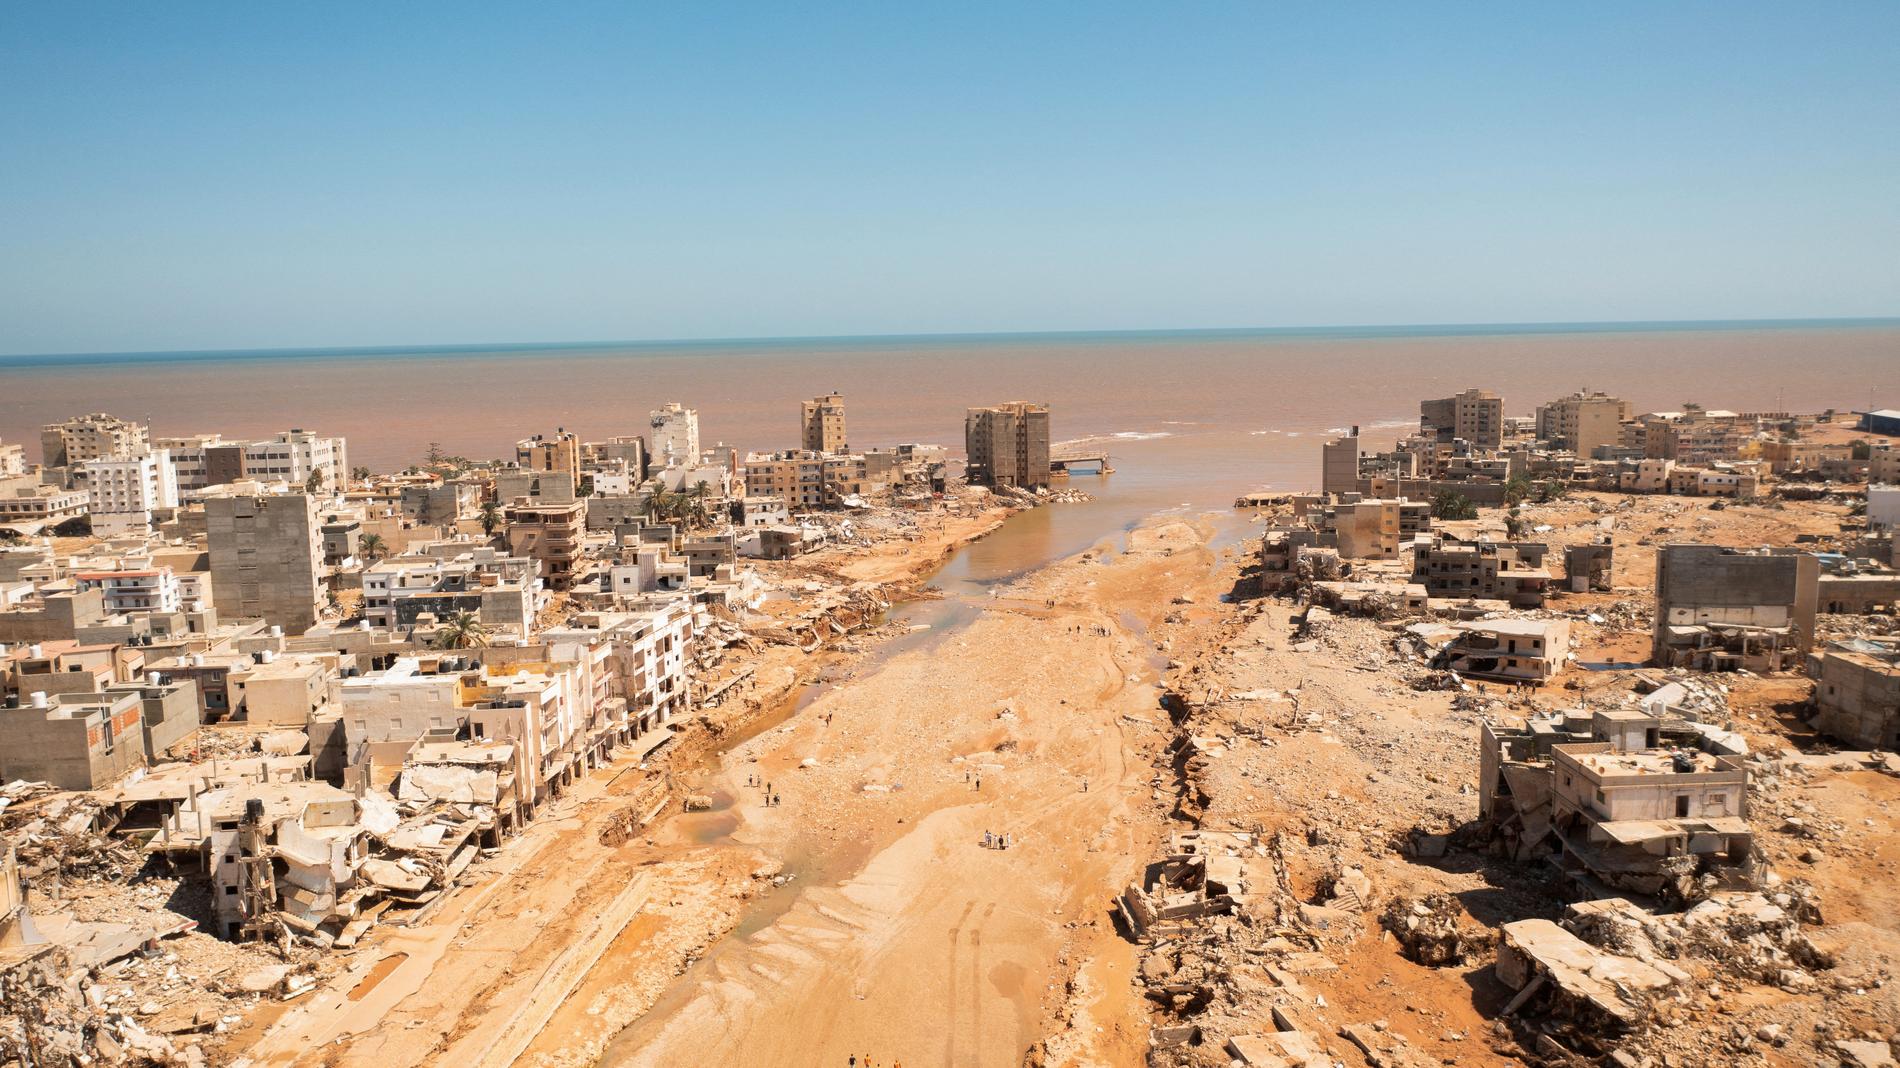 Flood disaster in Libya: Warning of dam collapse